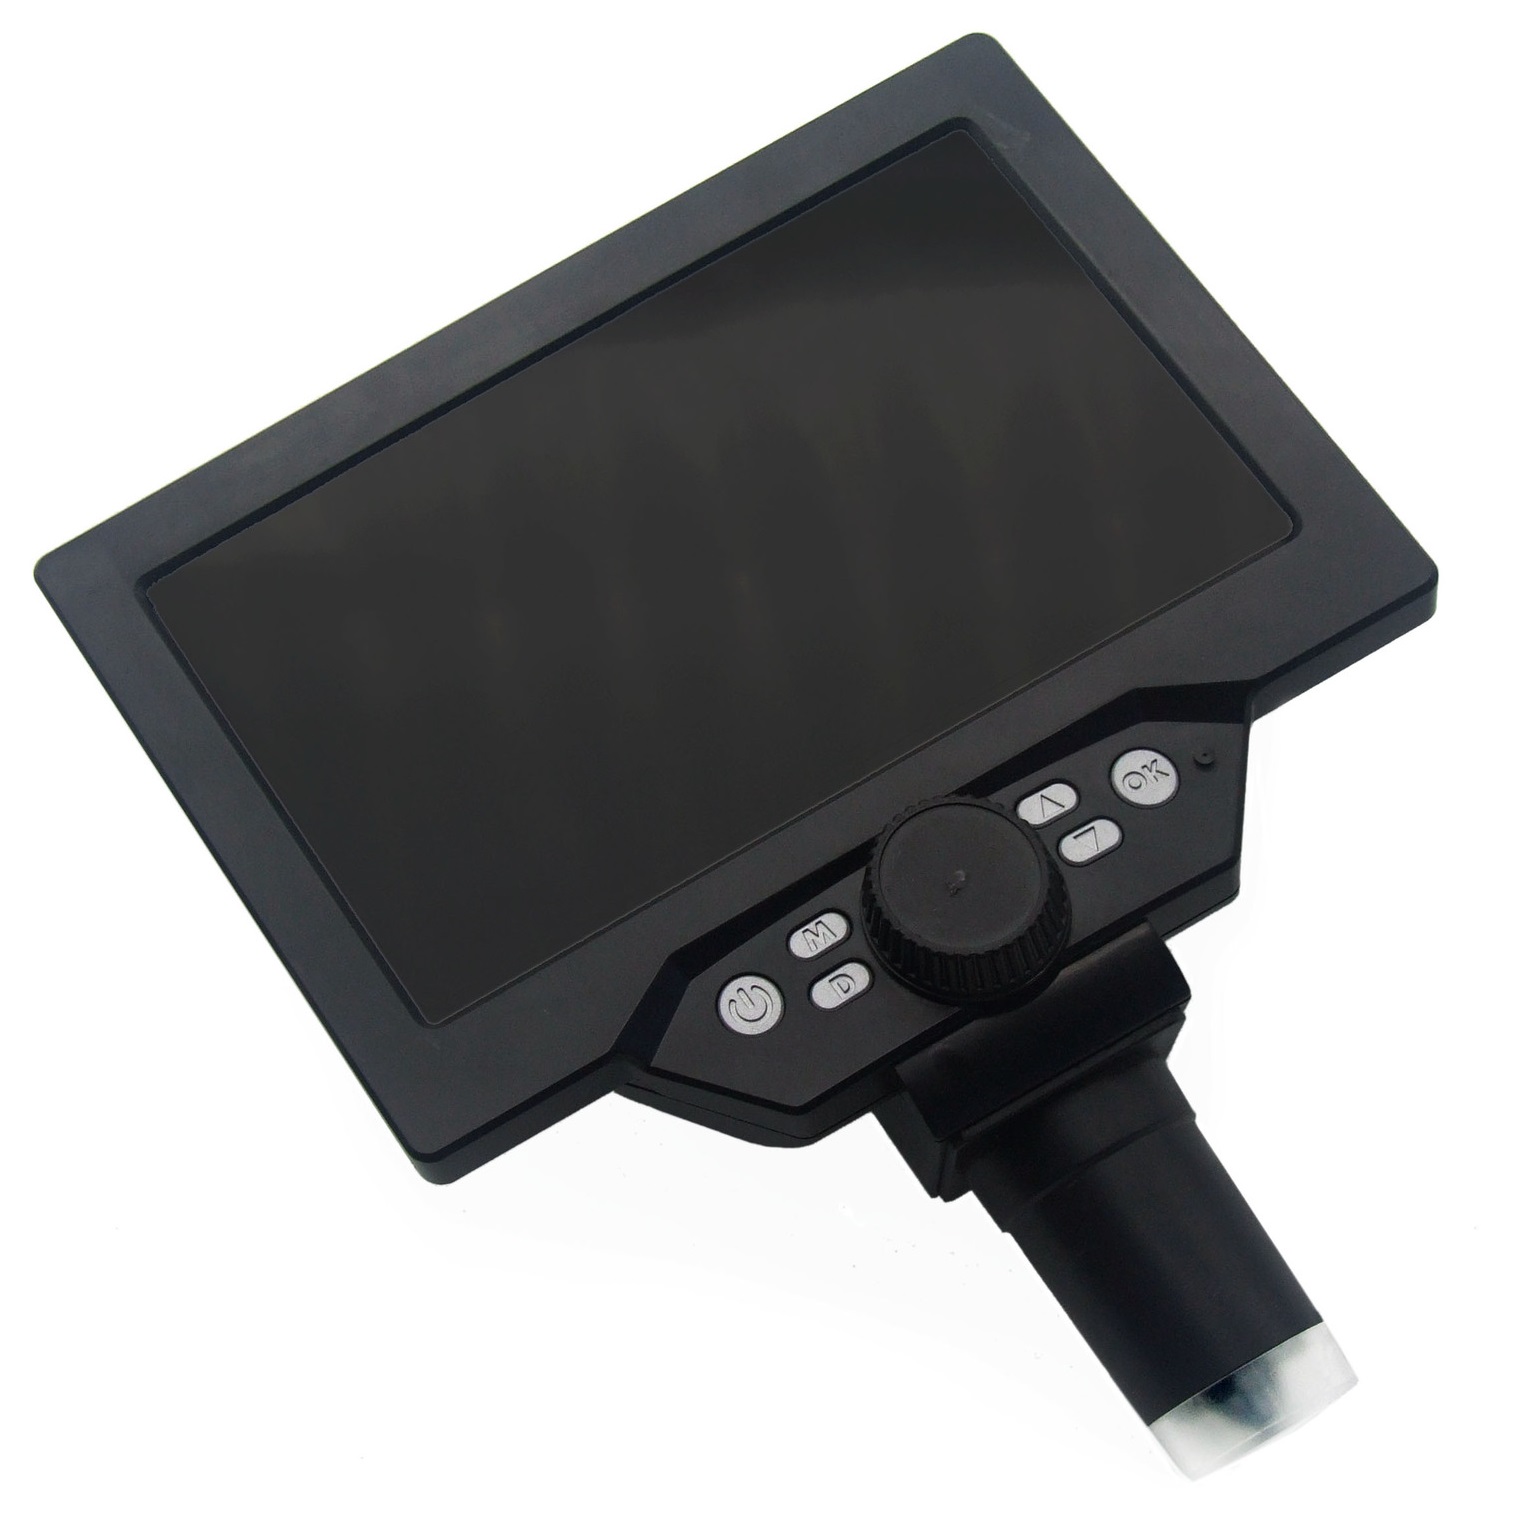 LCD Digital Microscope DM1200